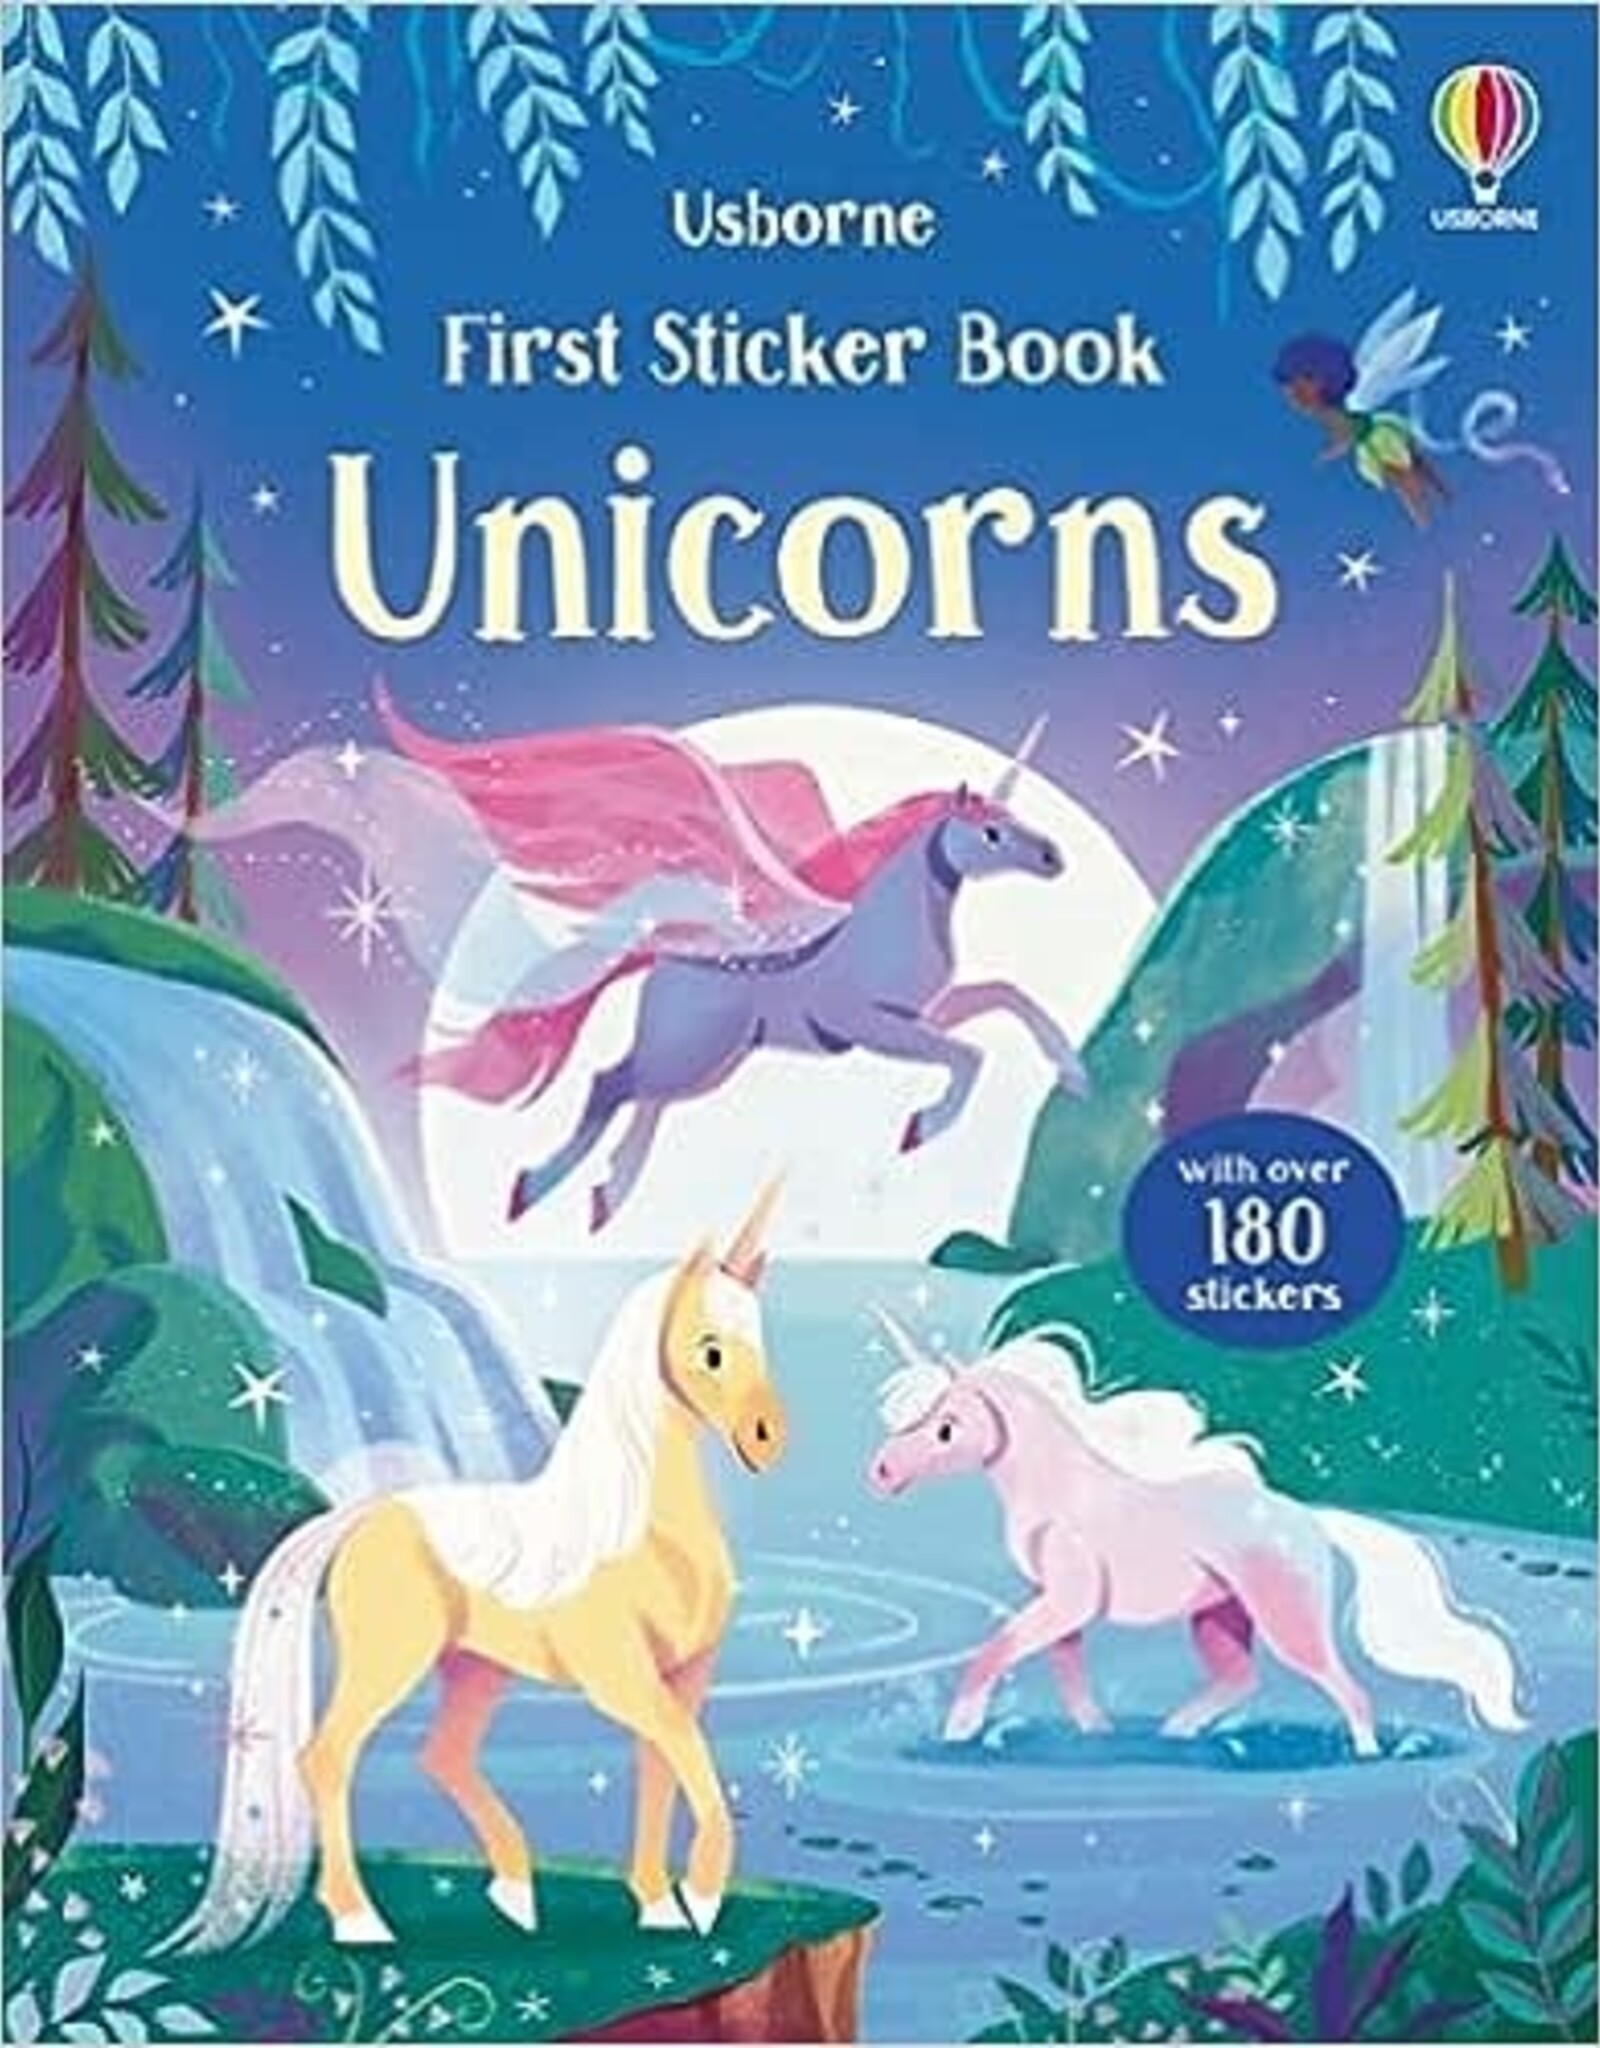 Harper Collins First Sticker Book Unicorn